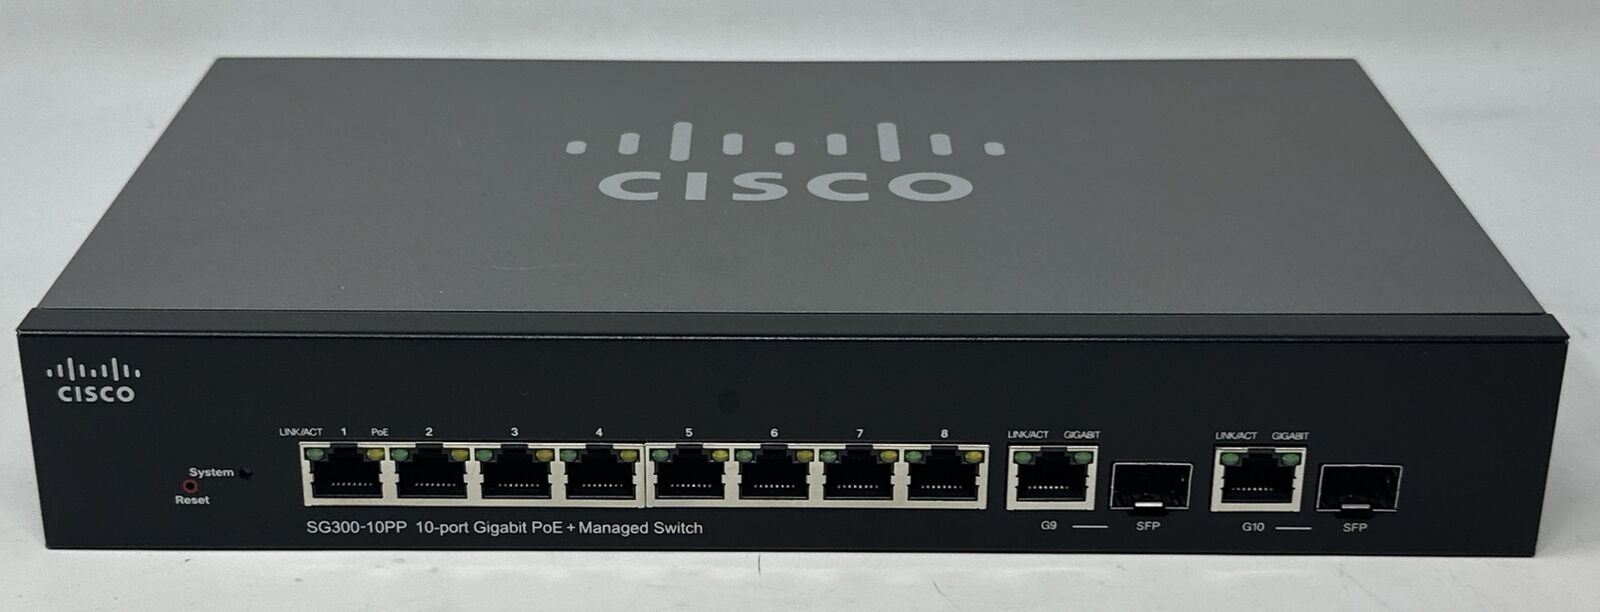 Cisco SG300-10PP-K9 V03 10-Port Gigabit PoE+ Managed Ethernet Switch SG300-10PP 